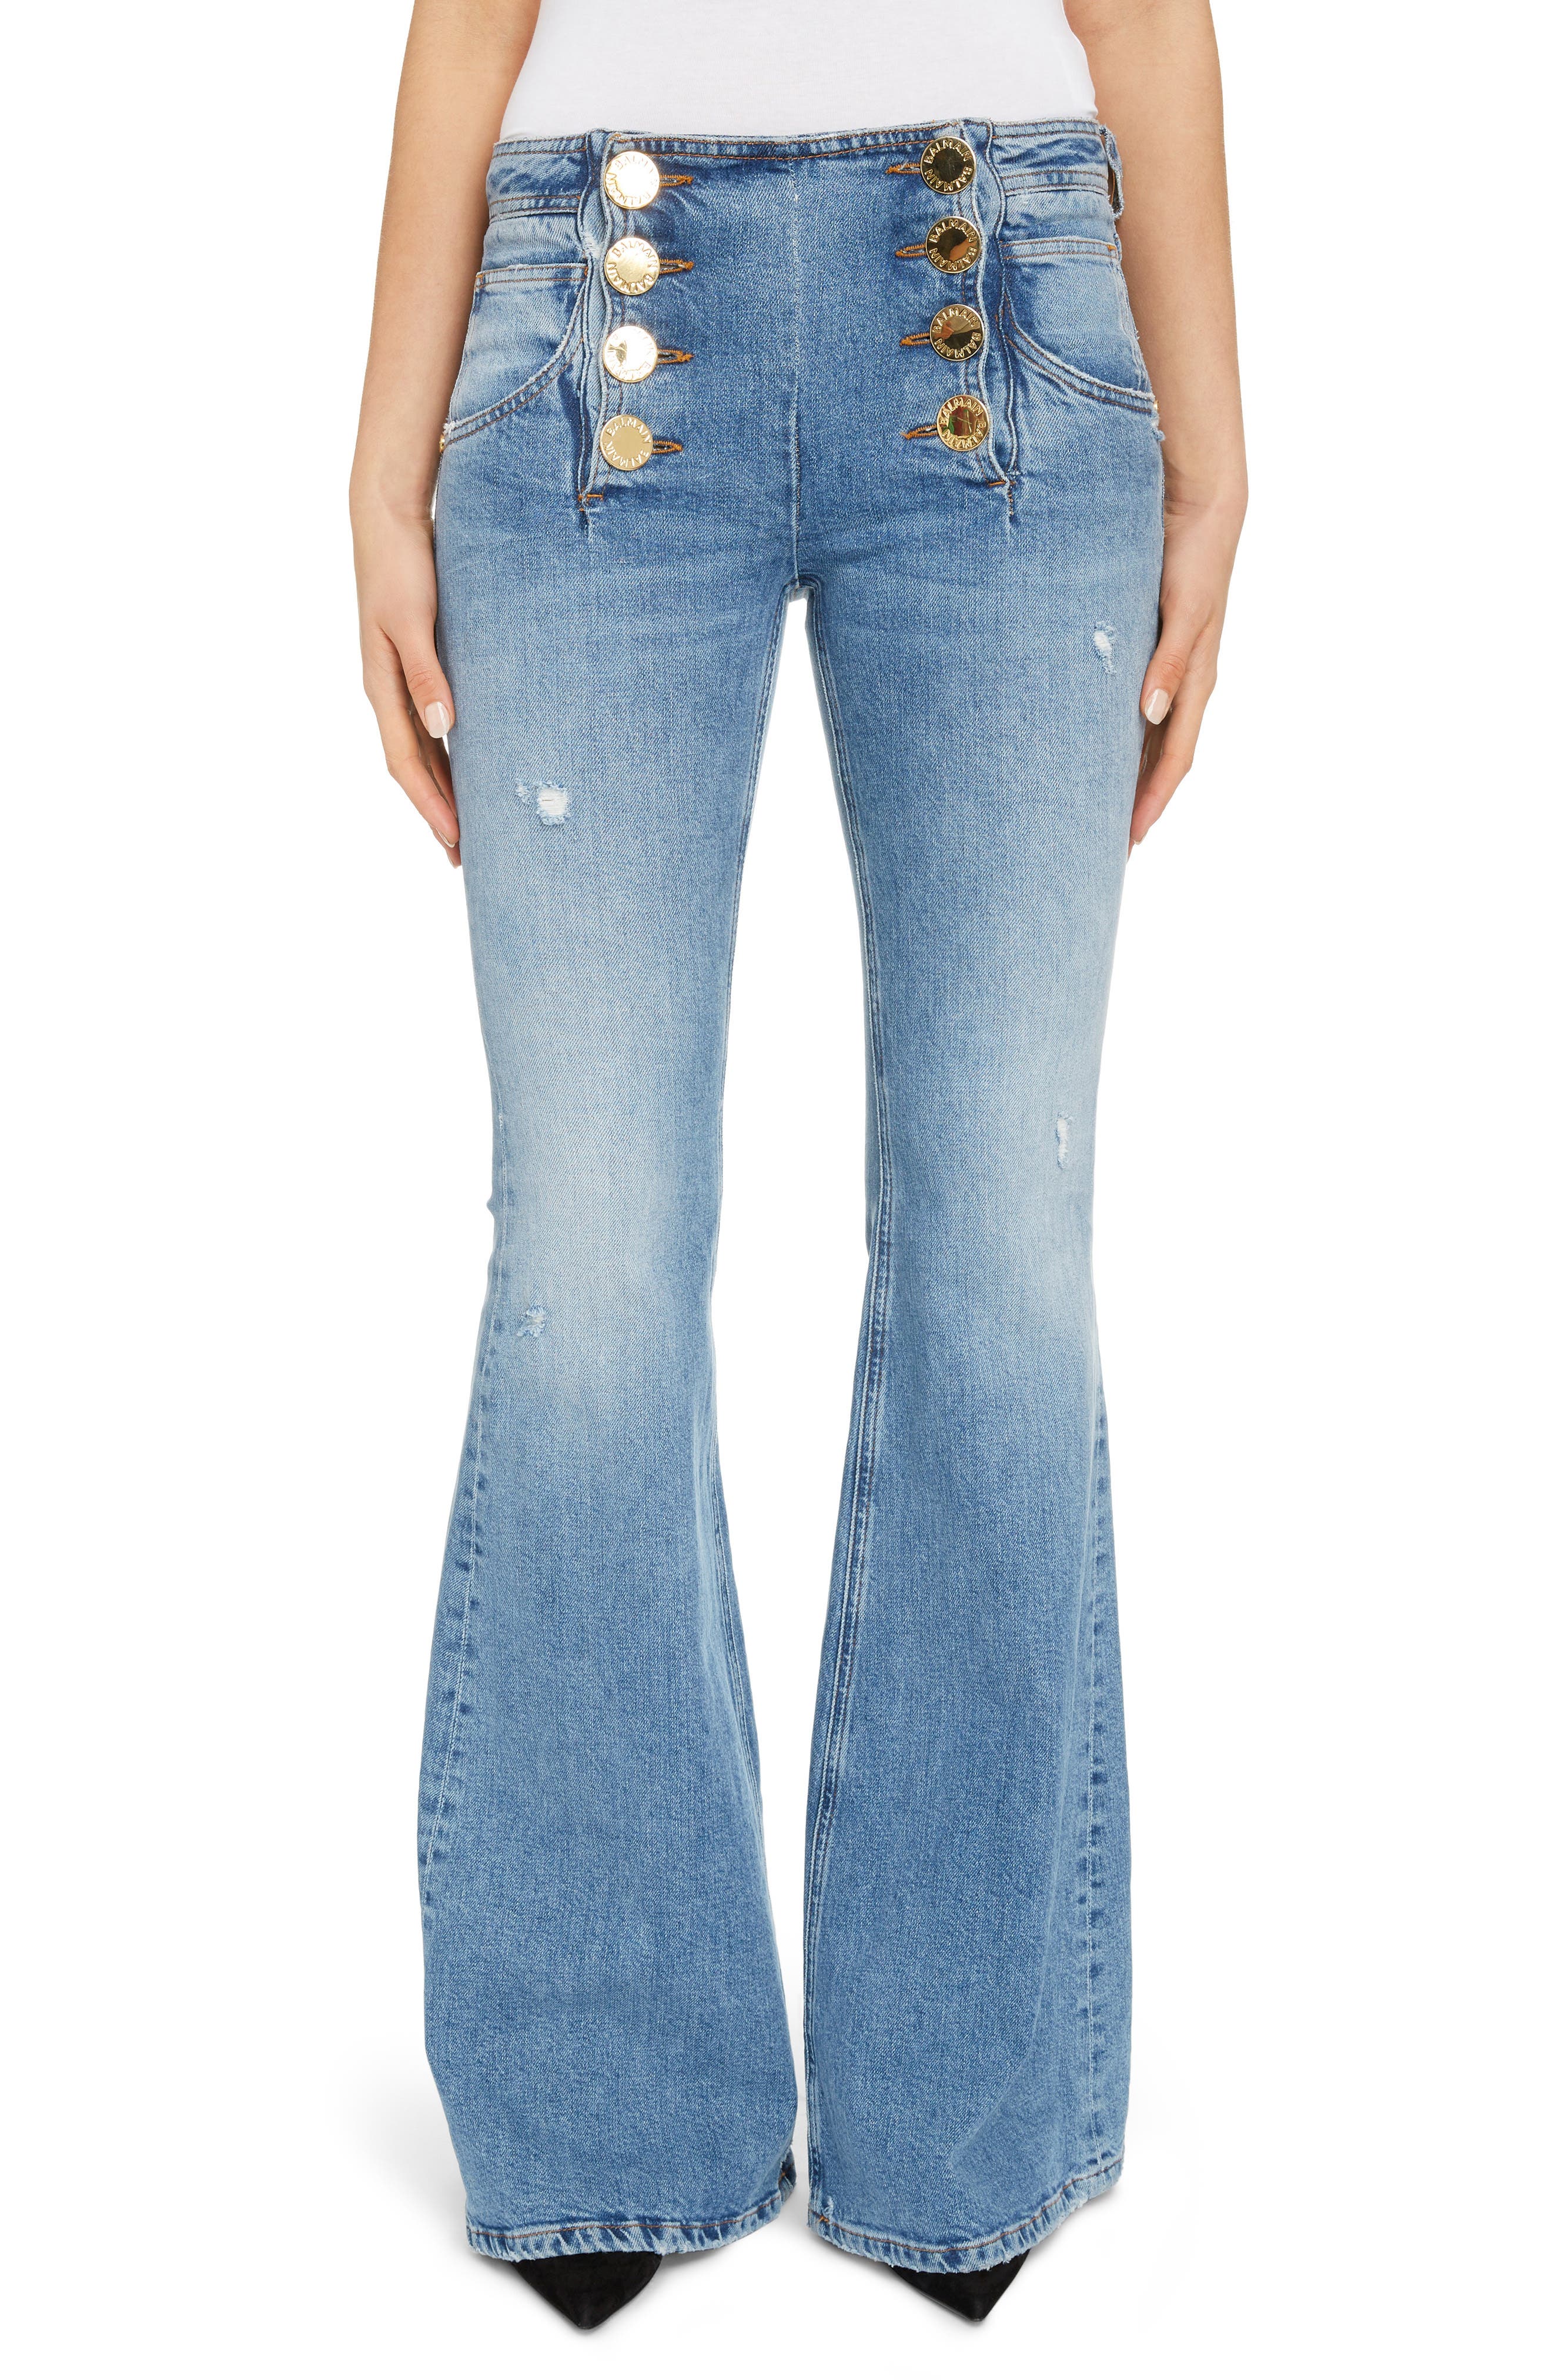 balmain jeans clearance